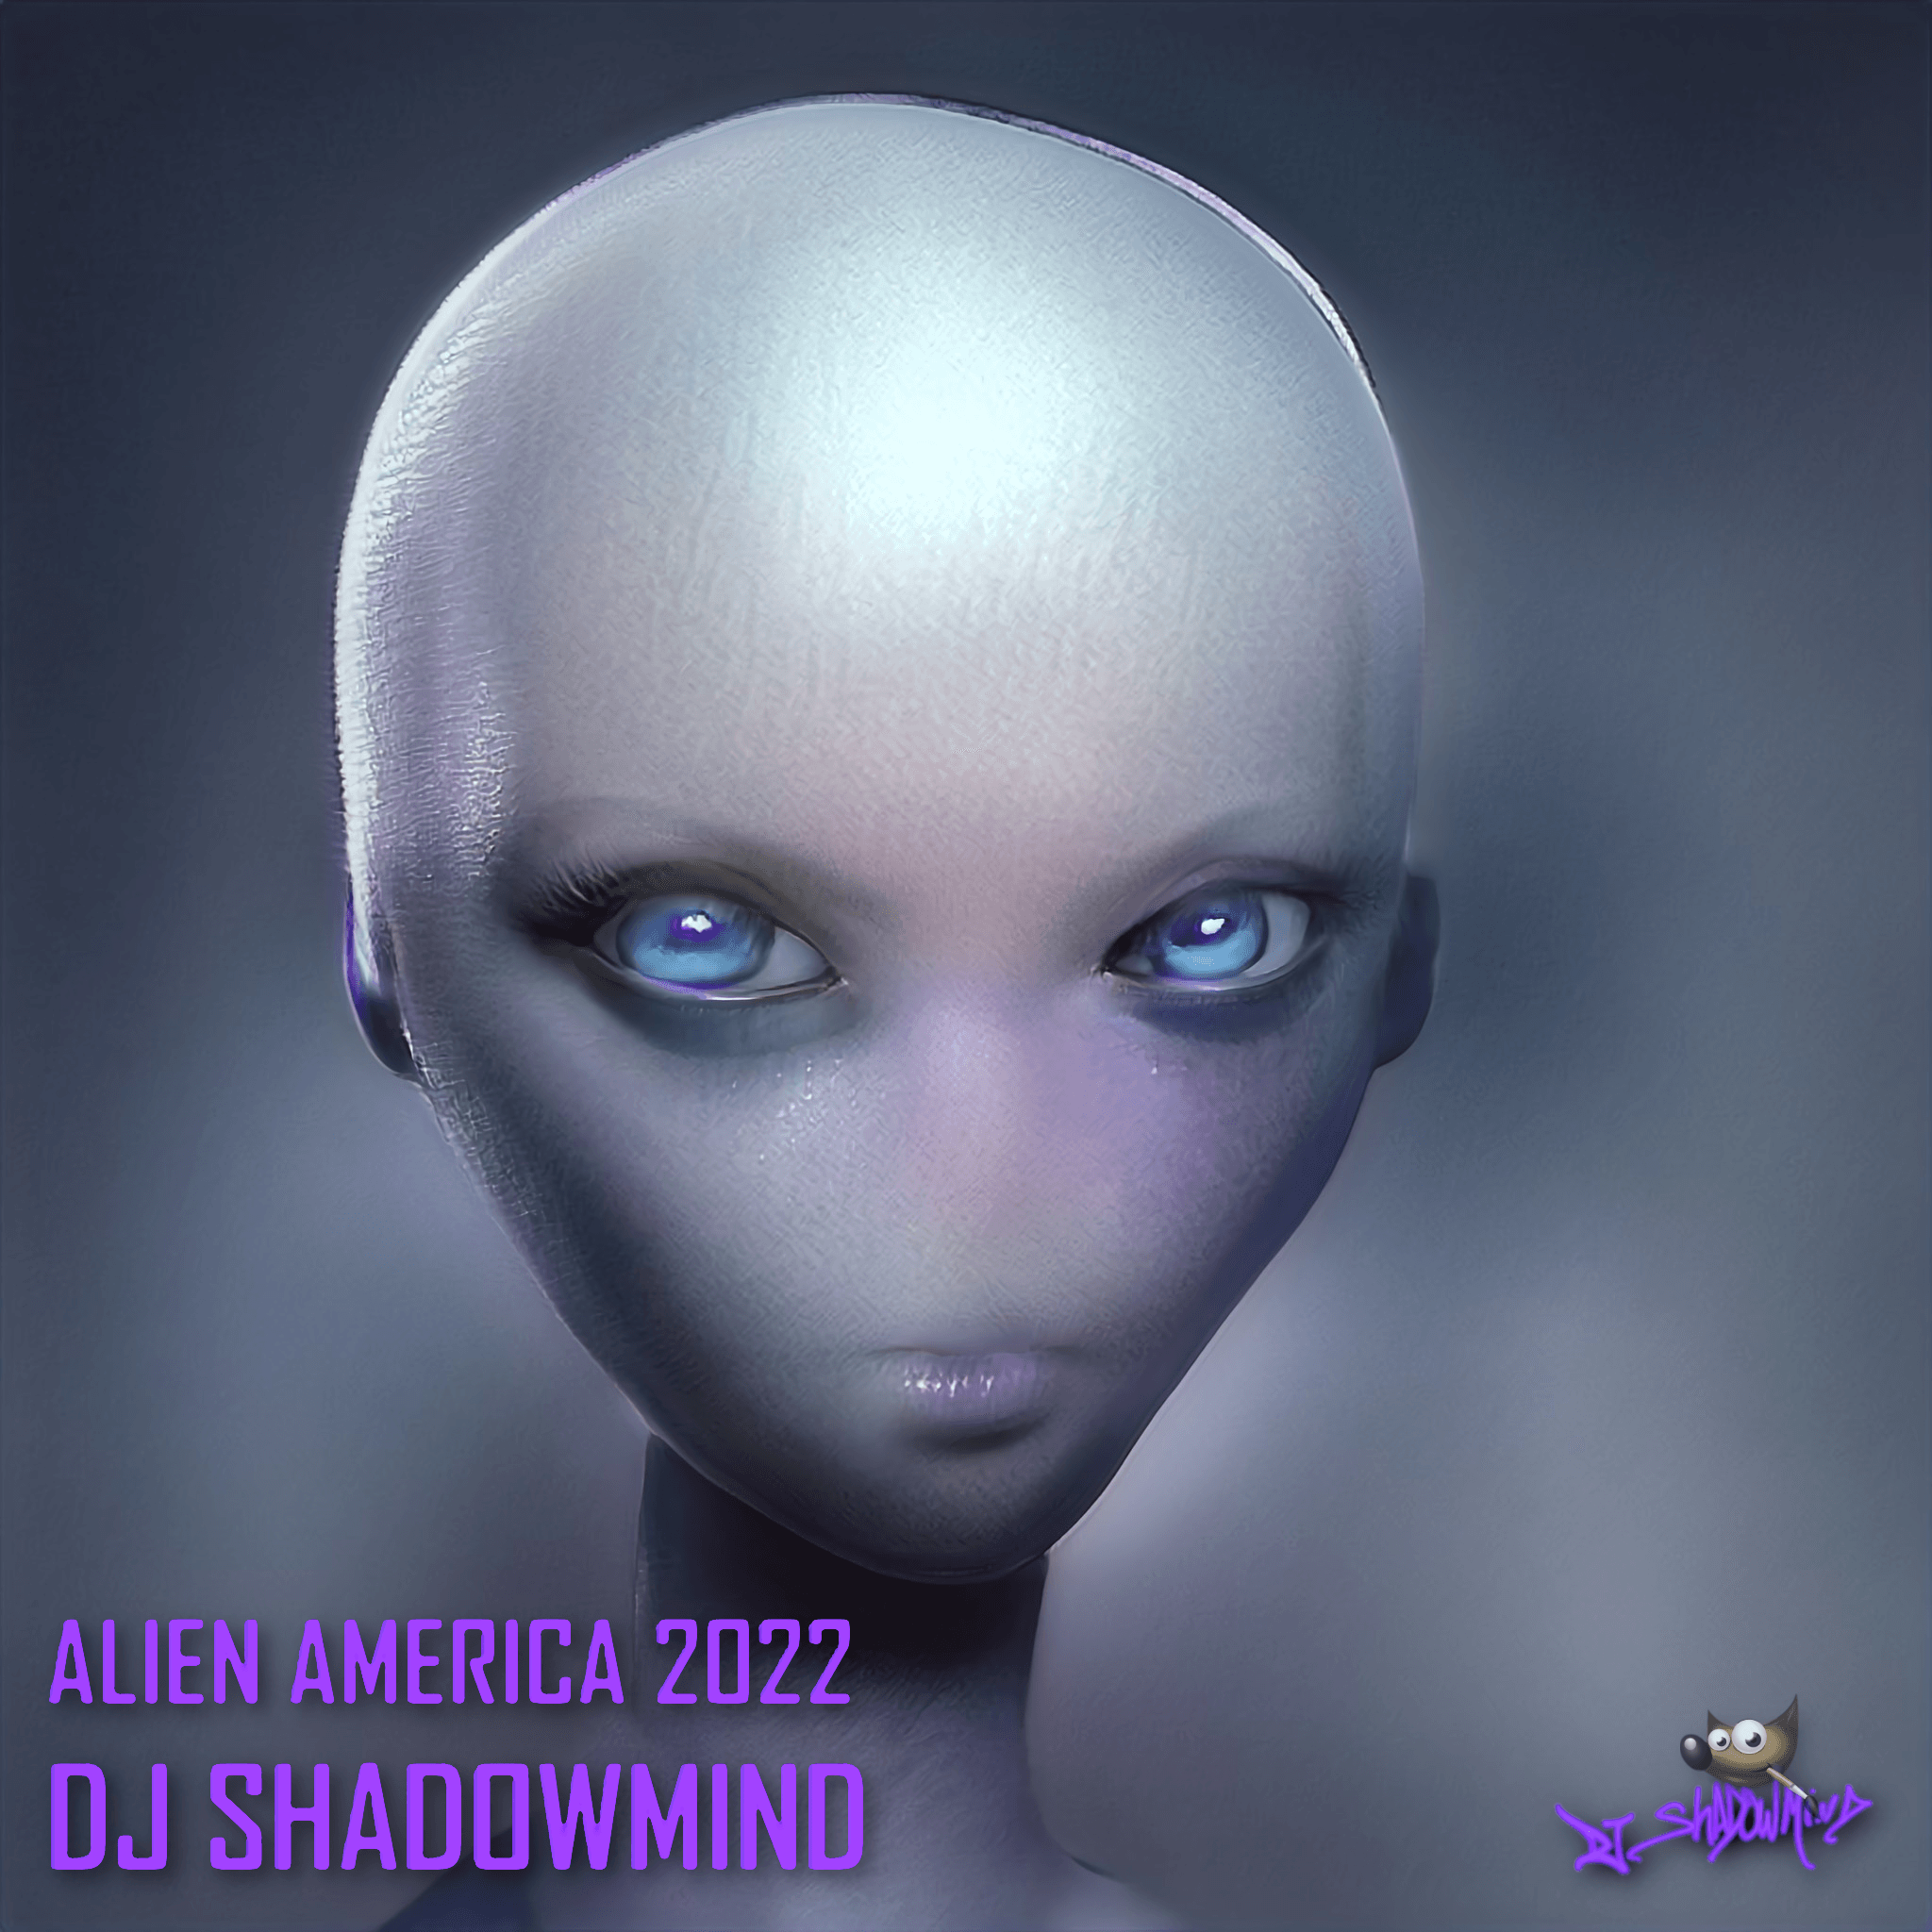 Alien America 2022 - Agent 165